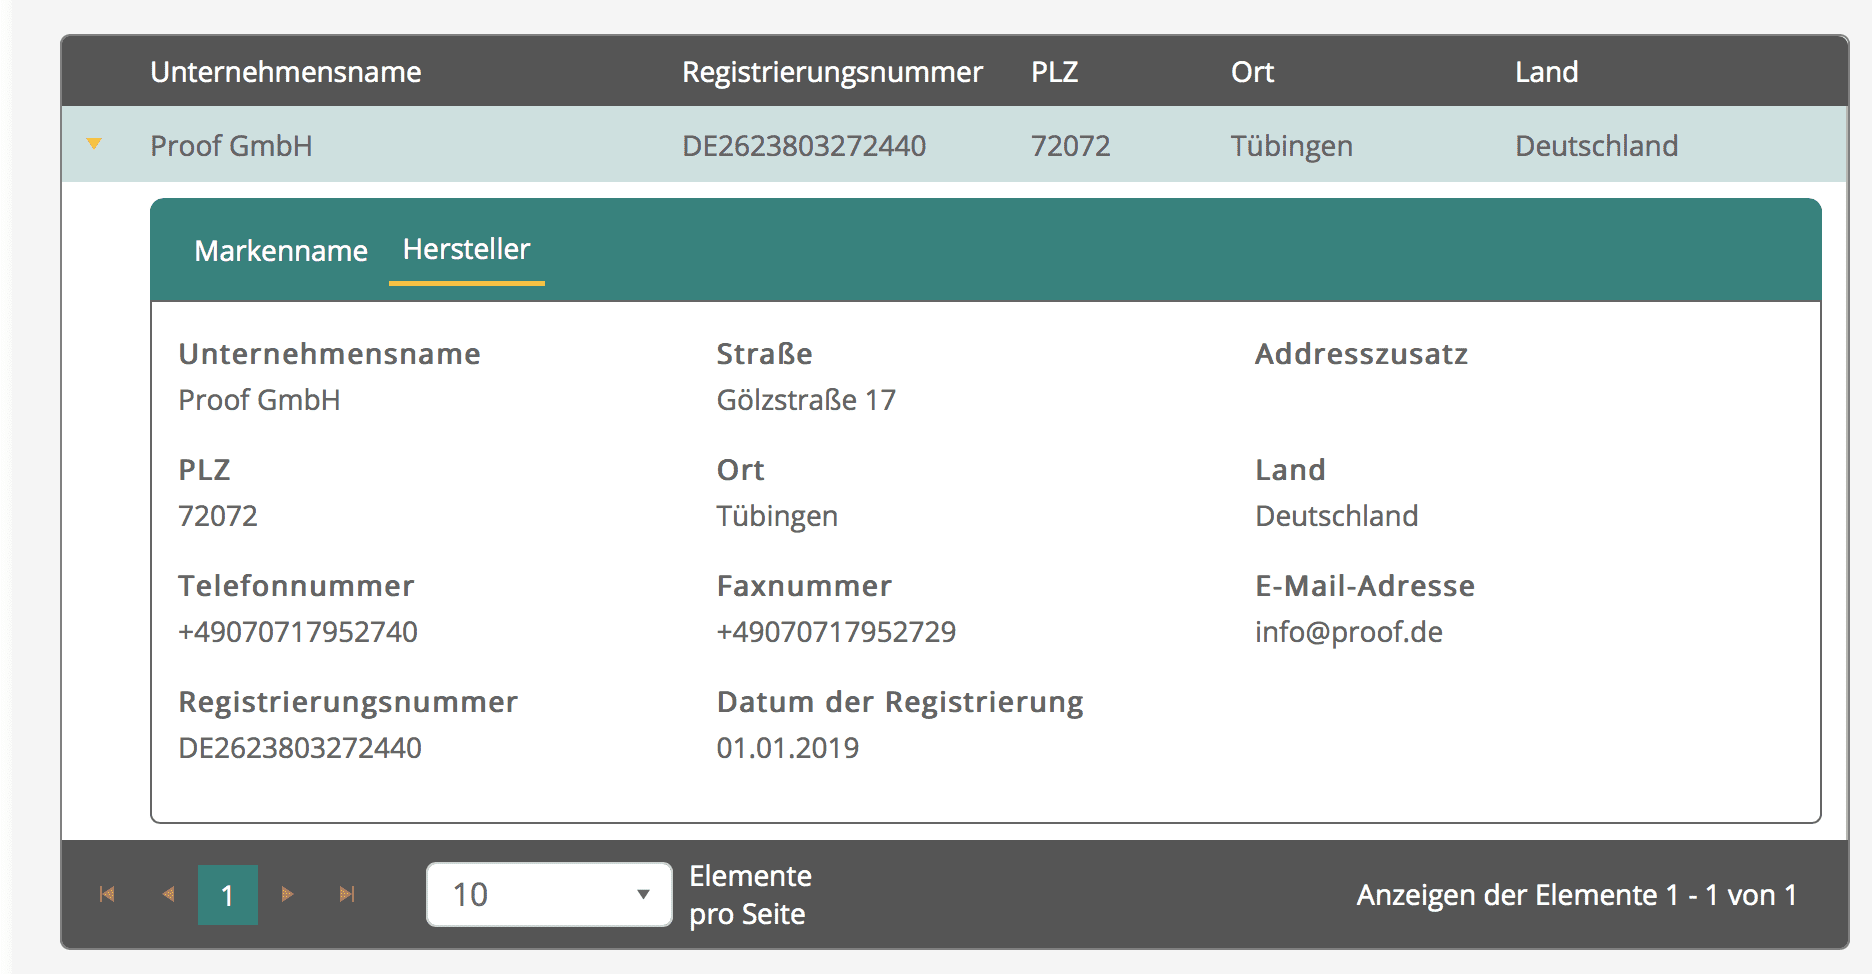 Proof GmbH Registrierung bei VerpackG